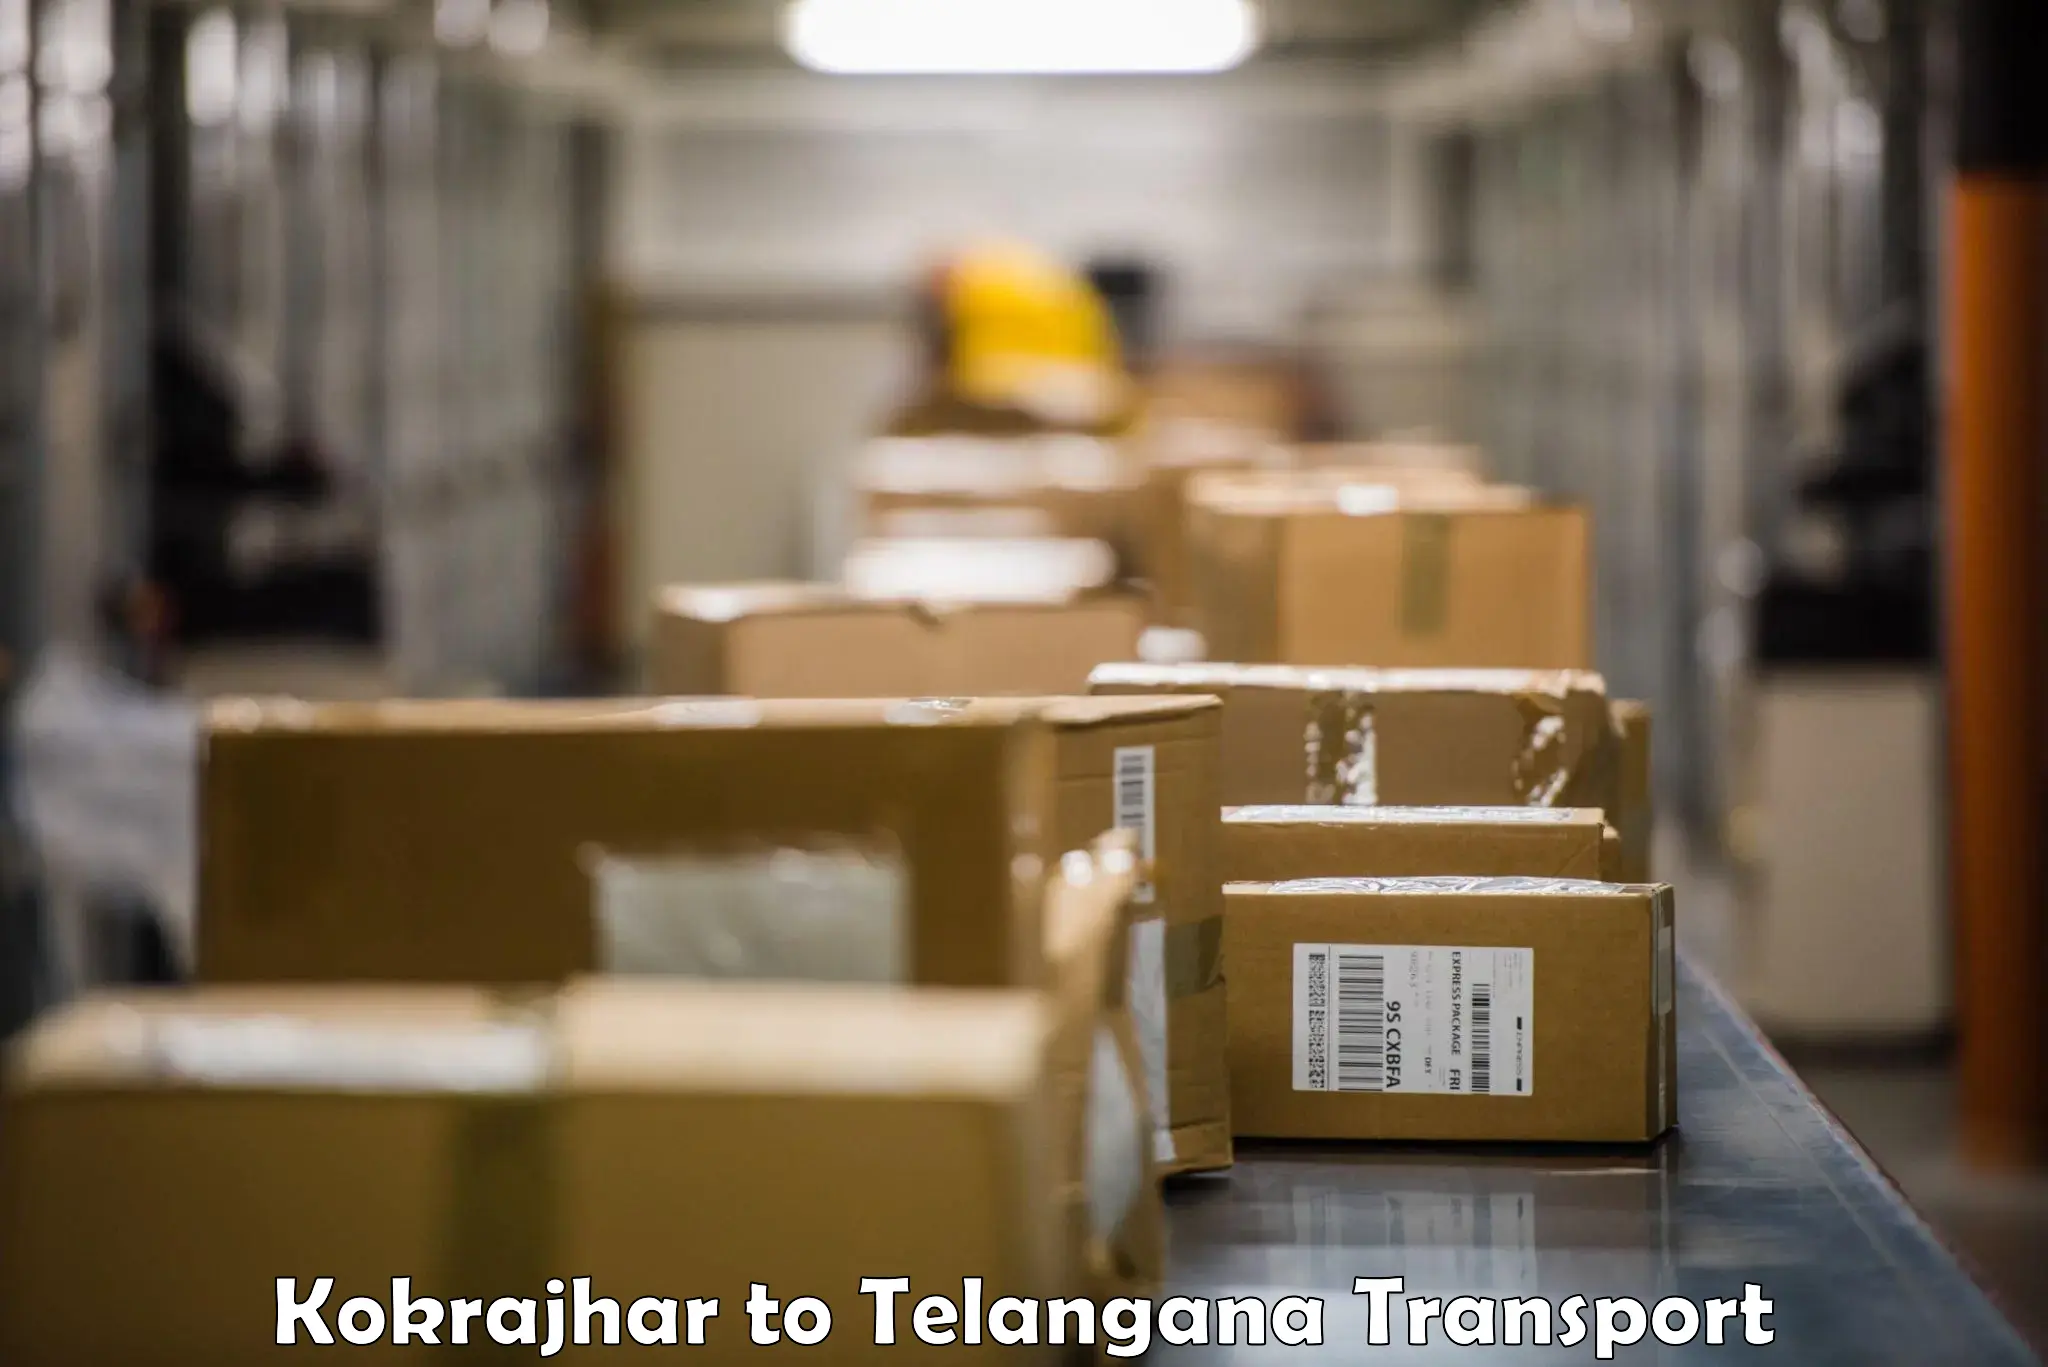 Delivery service Kokrajhar to Gangadhara